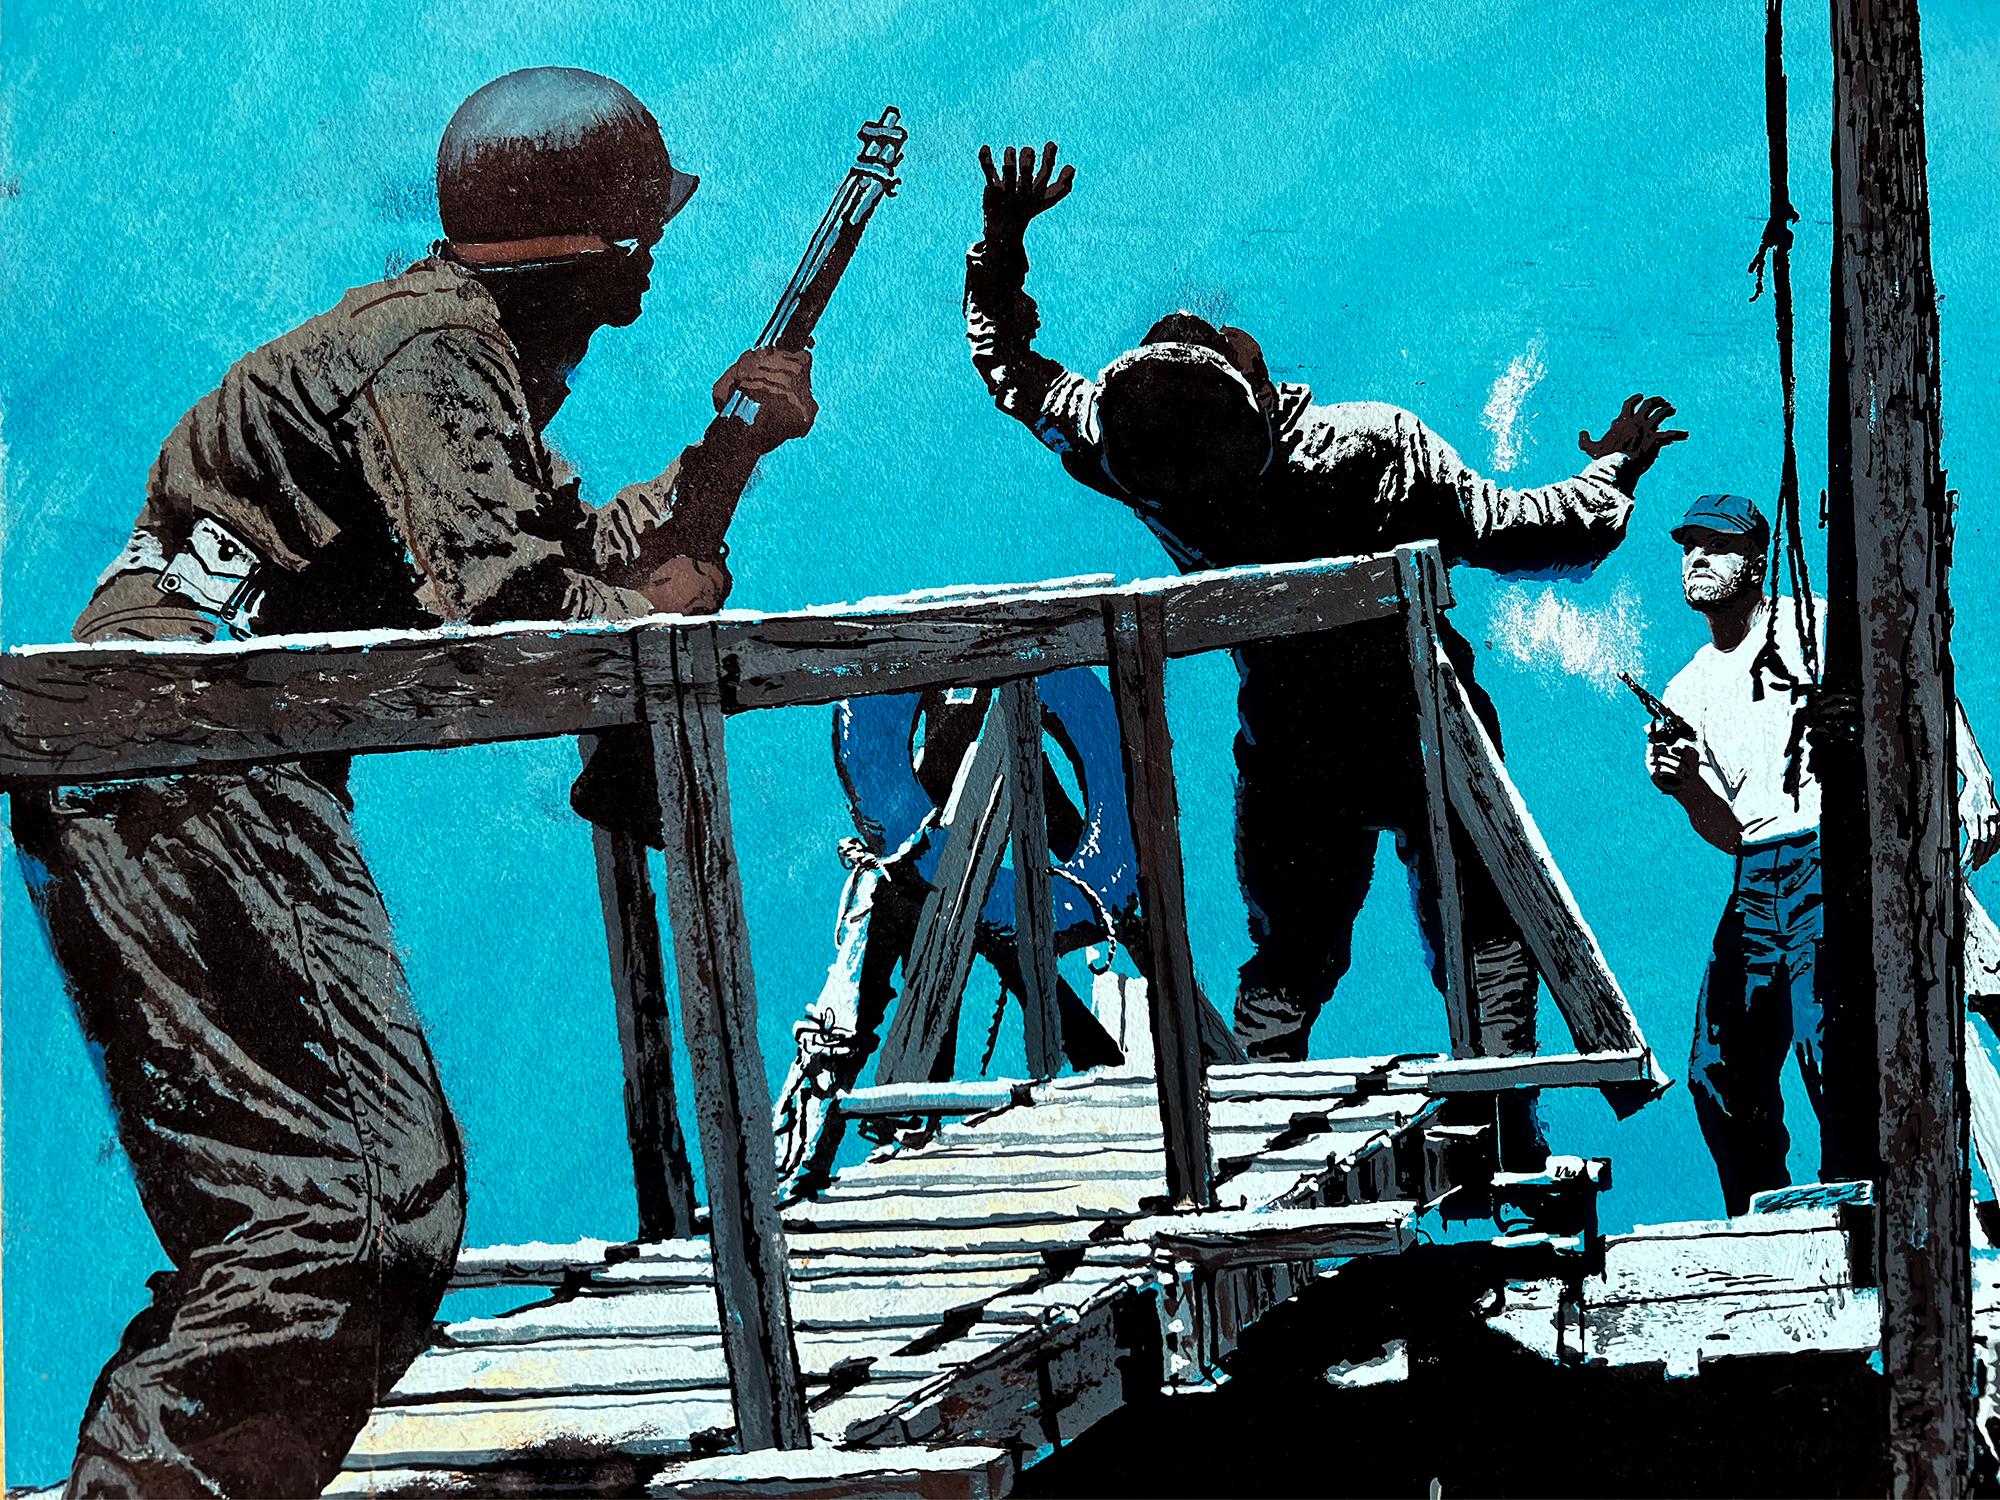 Pulp Magazine Marine Combat Scene Shoot Out in Blue Noir - Painting by John McDermott